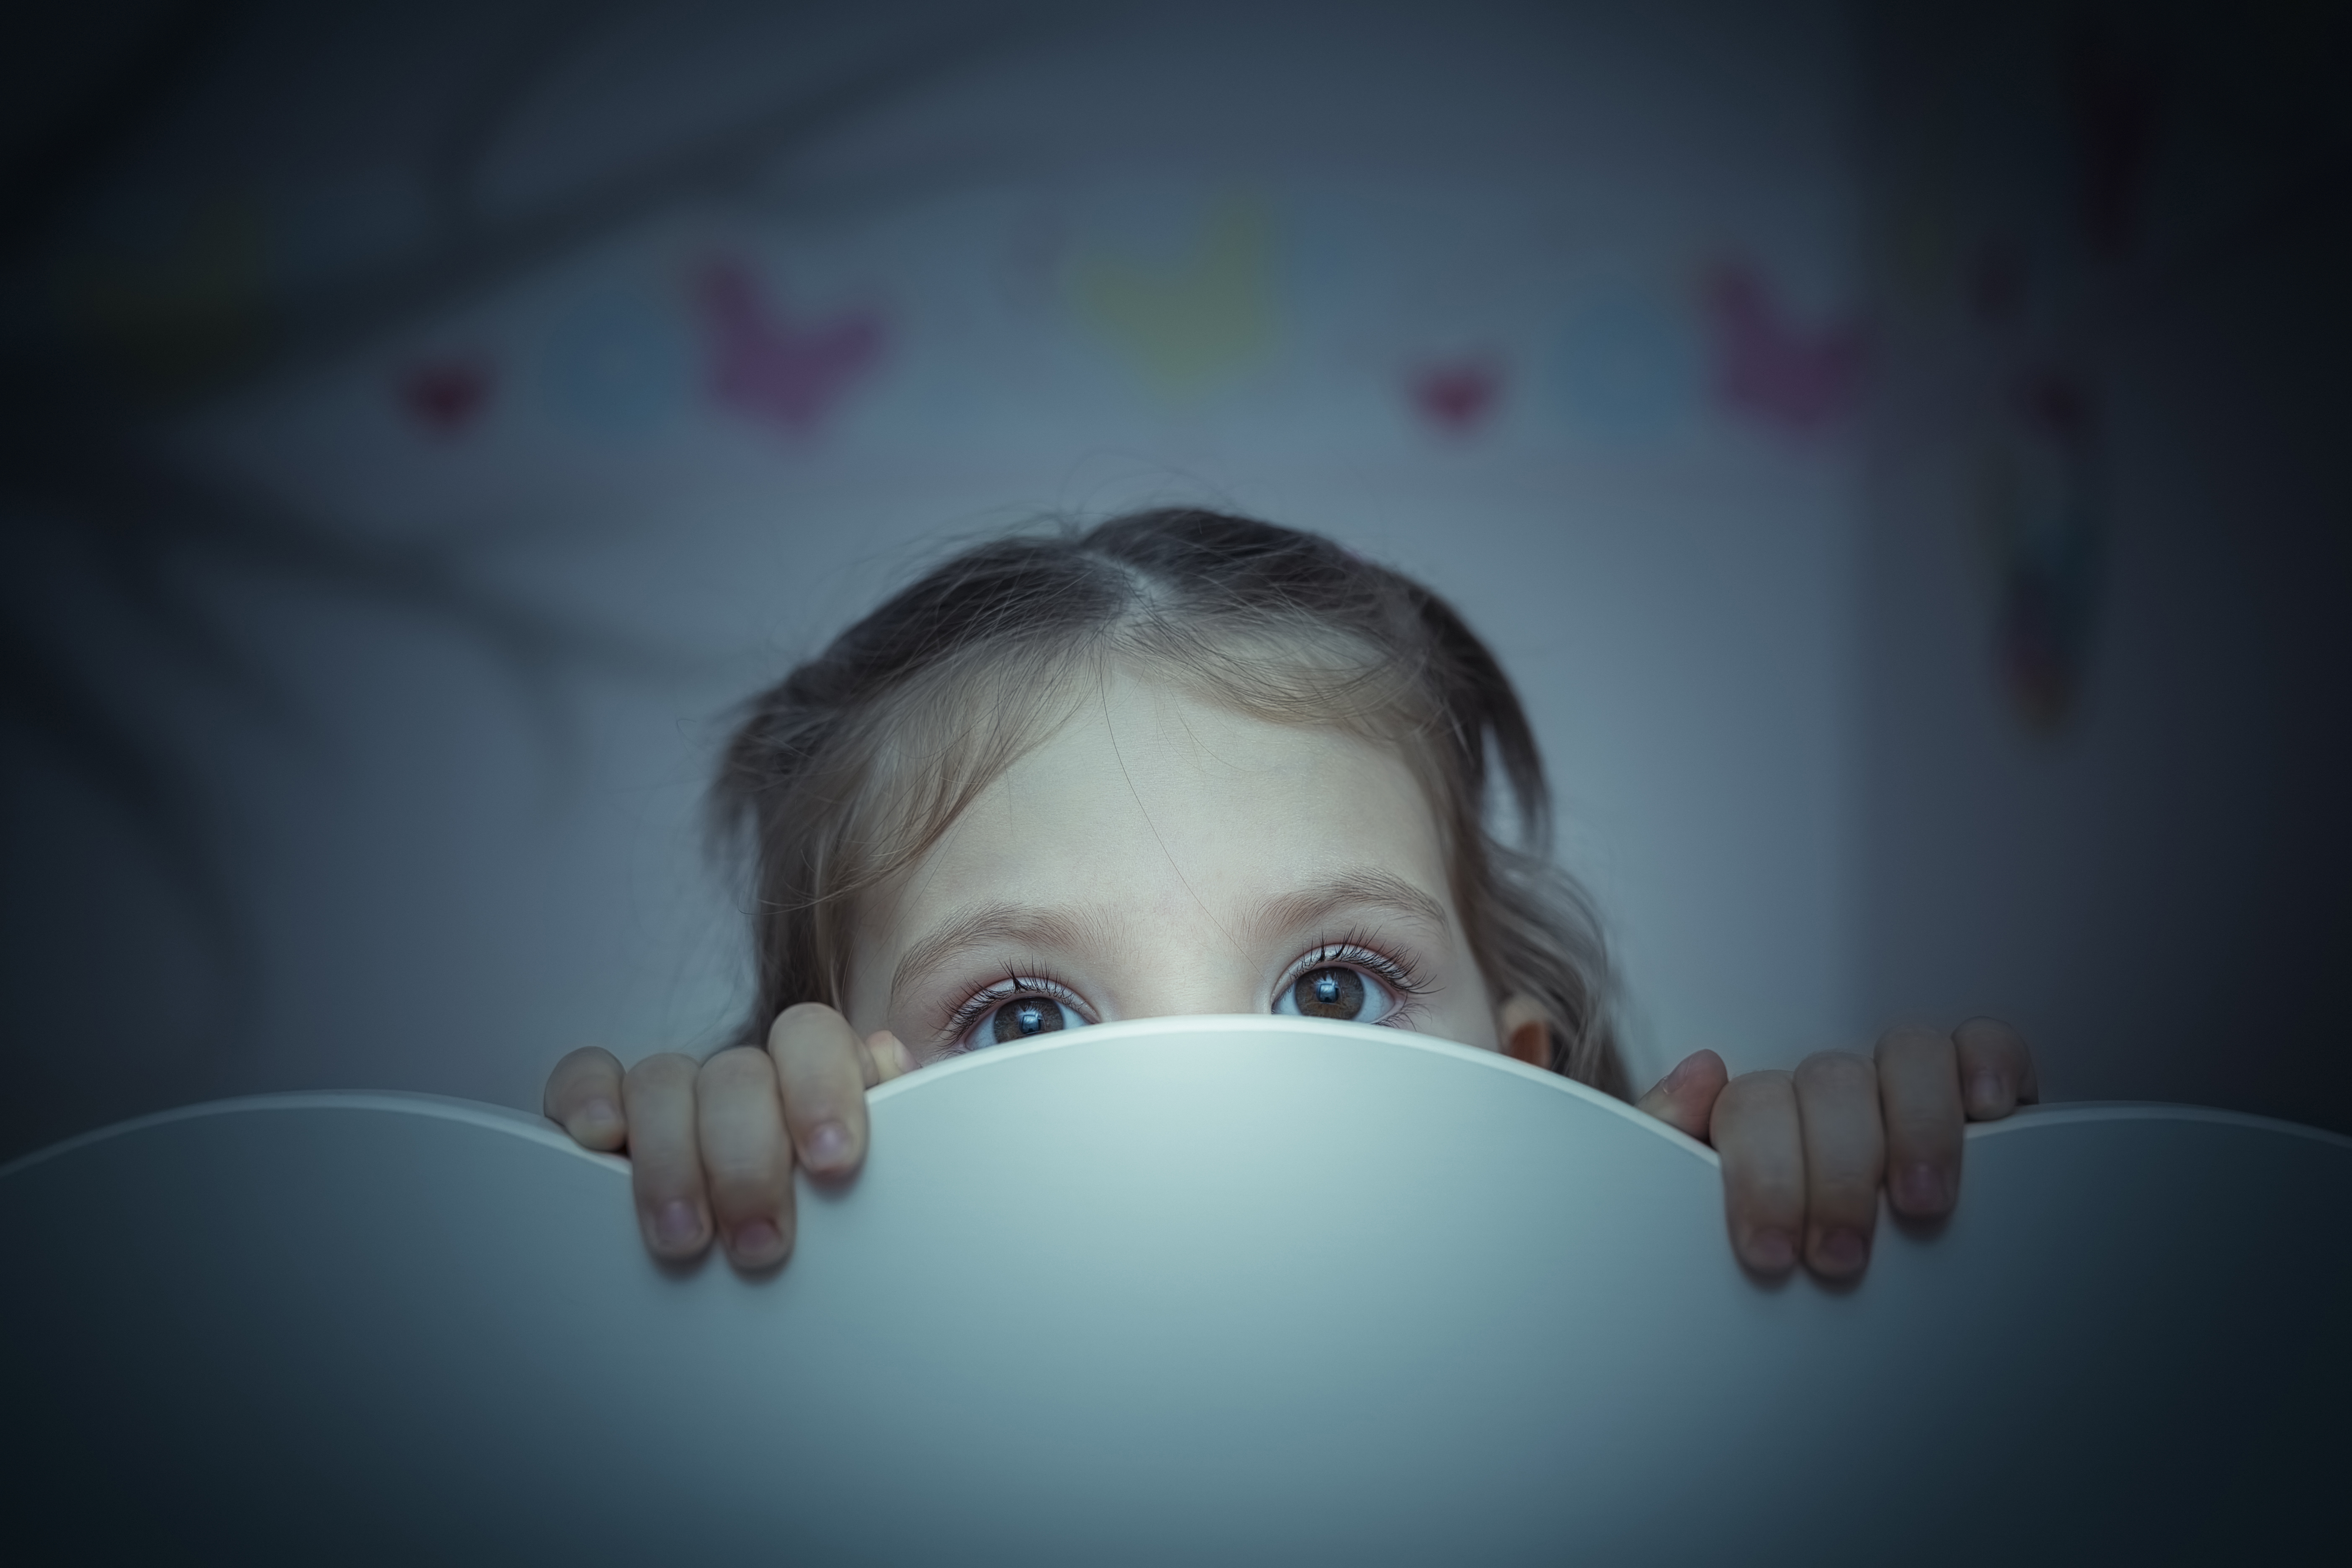 A little girl hiding behind a white surface | Source: Shutterstock